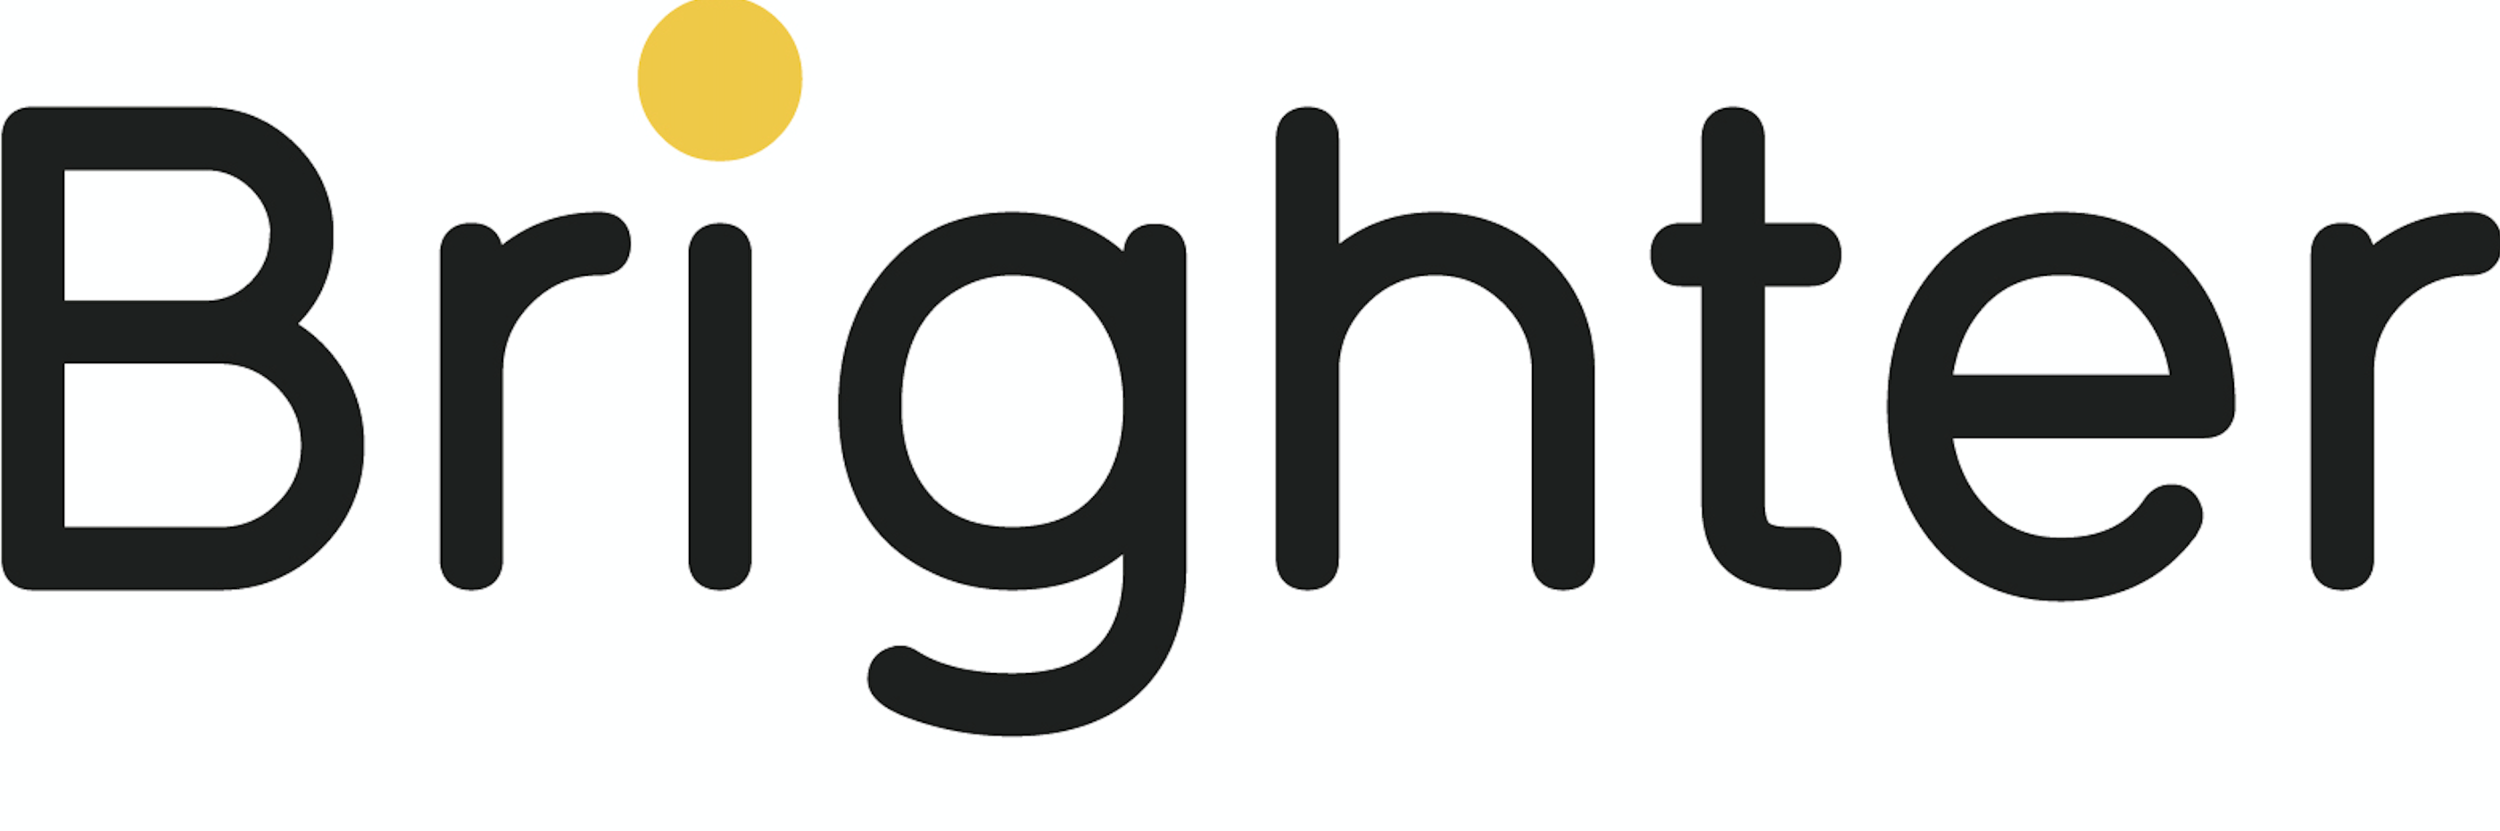 Brightness перевод на русский. Брайт логотип. Bright photo логотип. Brighter [Brighter] Brighter. OIS Bright логотип.